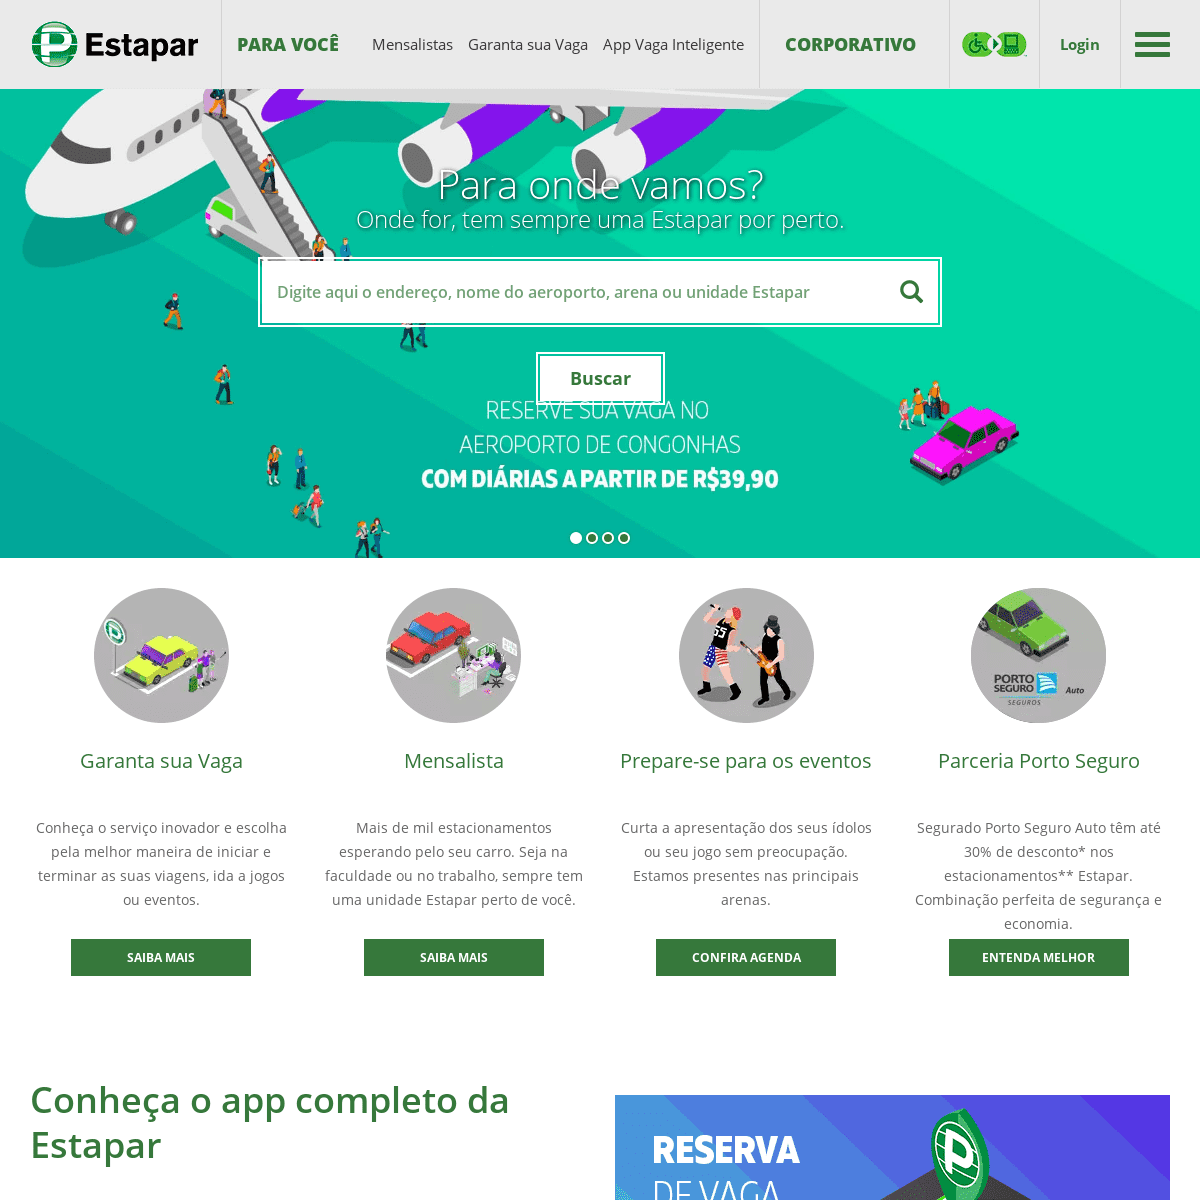 A complete backup of estapar.com.br